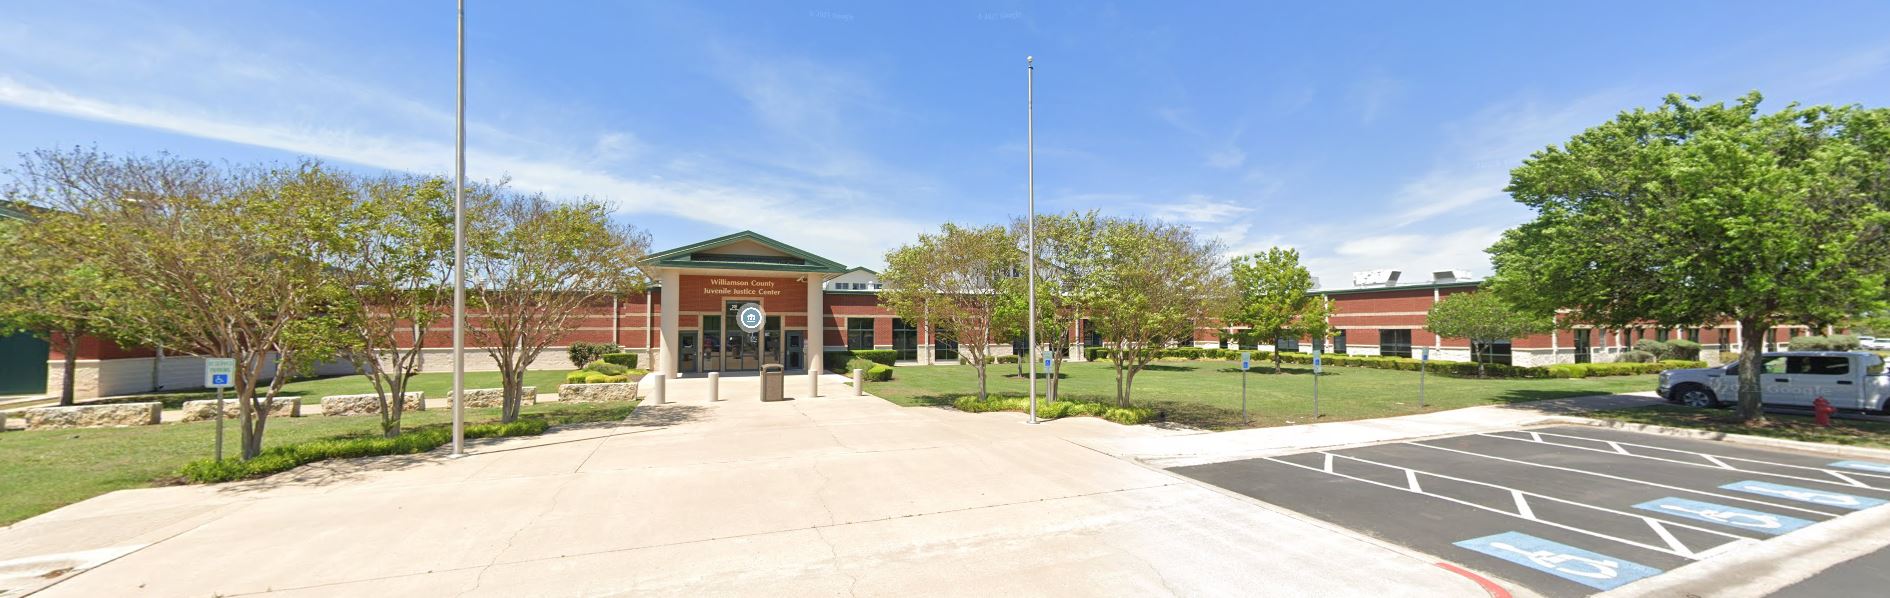 Photos Williamson County Juvenile Detention Center 2